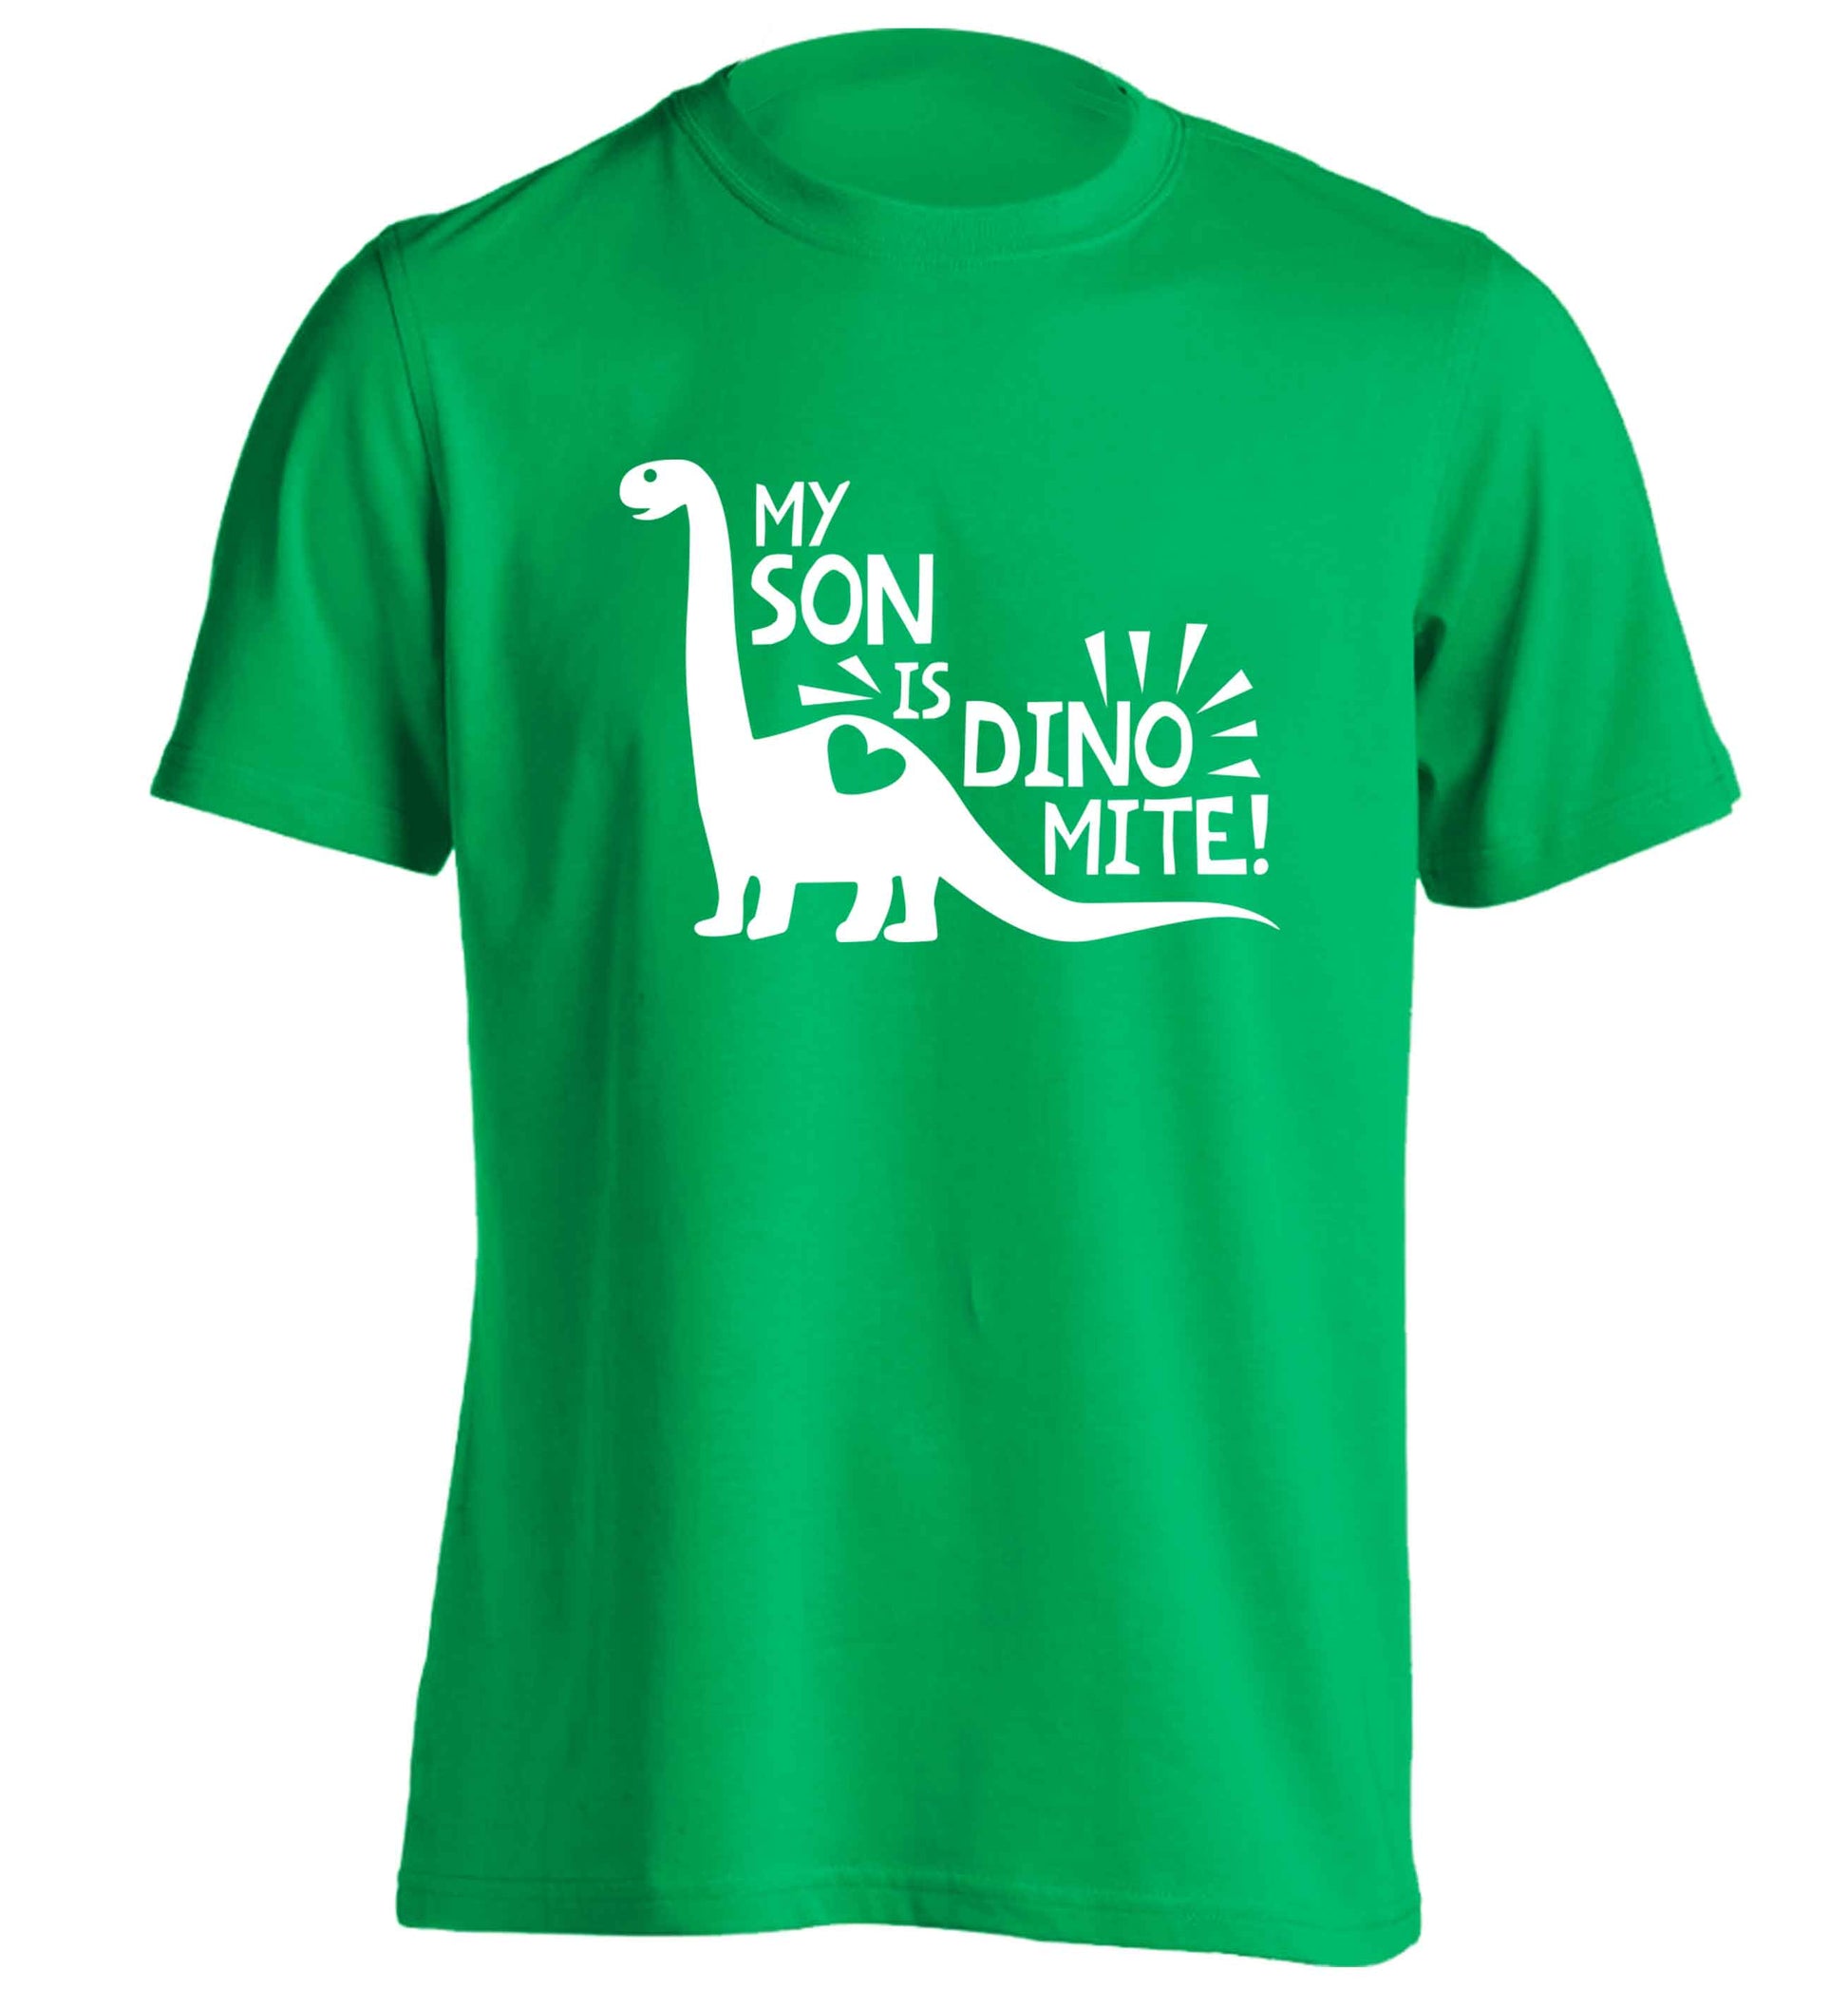 My son is dinomite! adults unisex green Tshirt 2XL